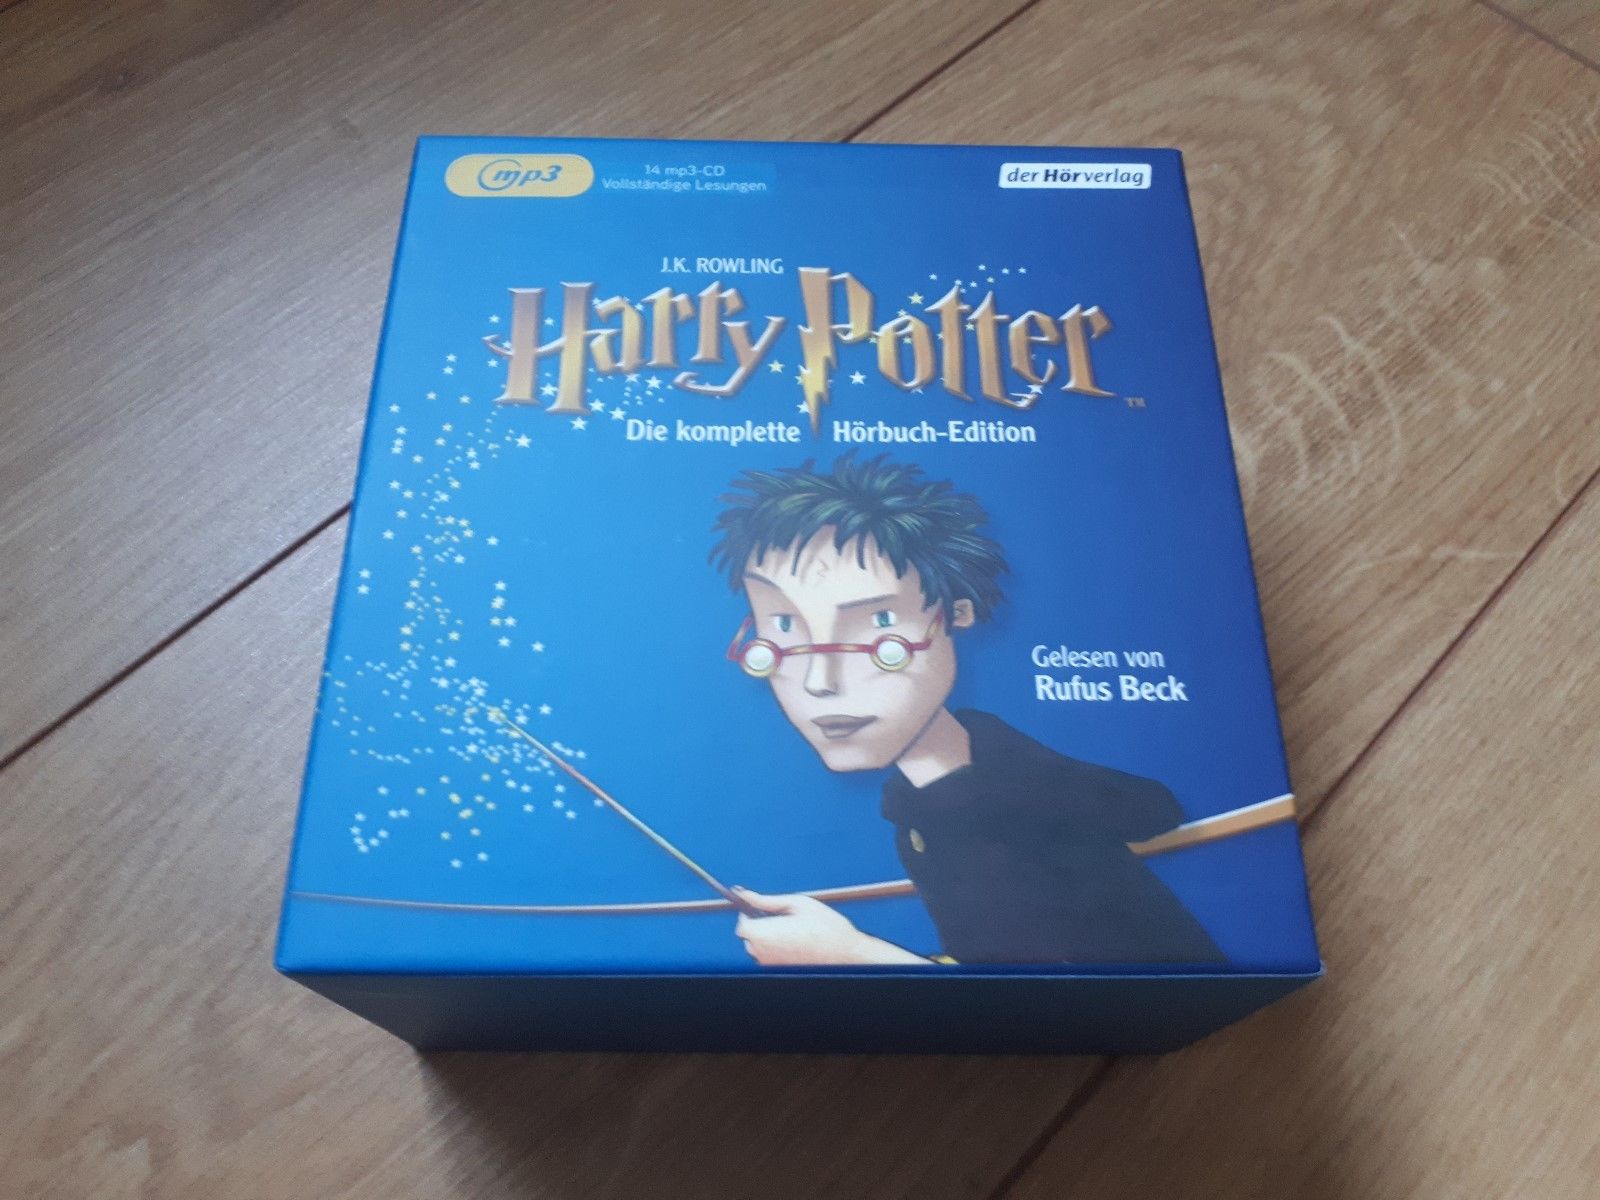 Harry Potter: Die komplette Hörbuch Edition, MP3 CD, Teil 1 - 7, Hörspiel, Box